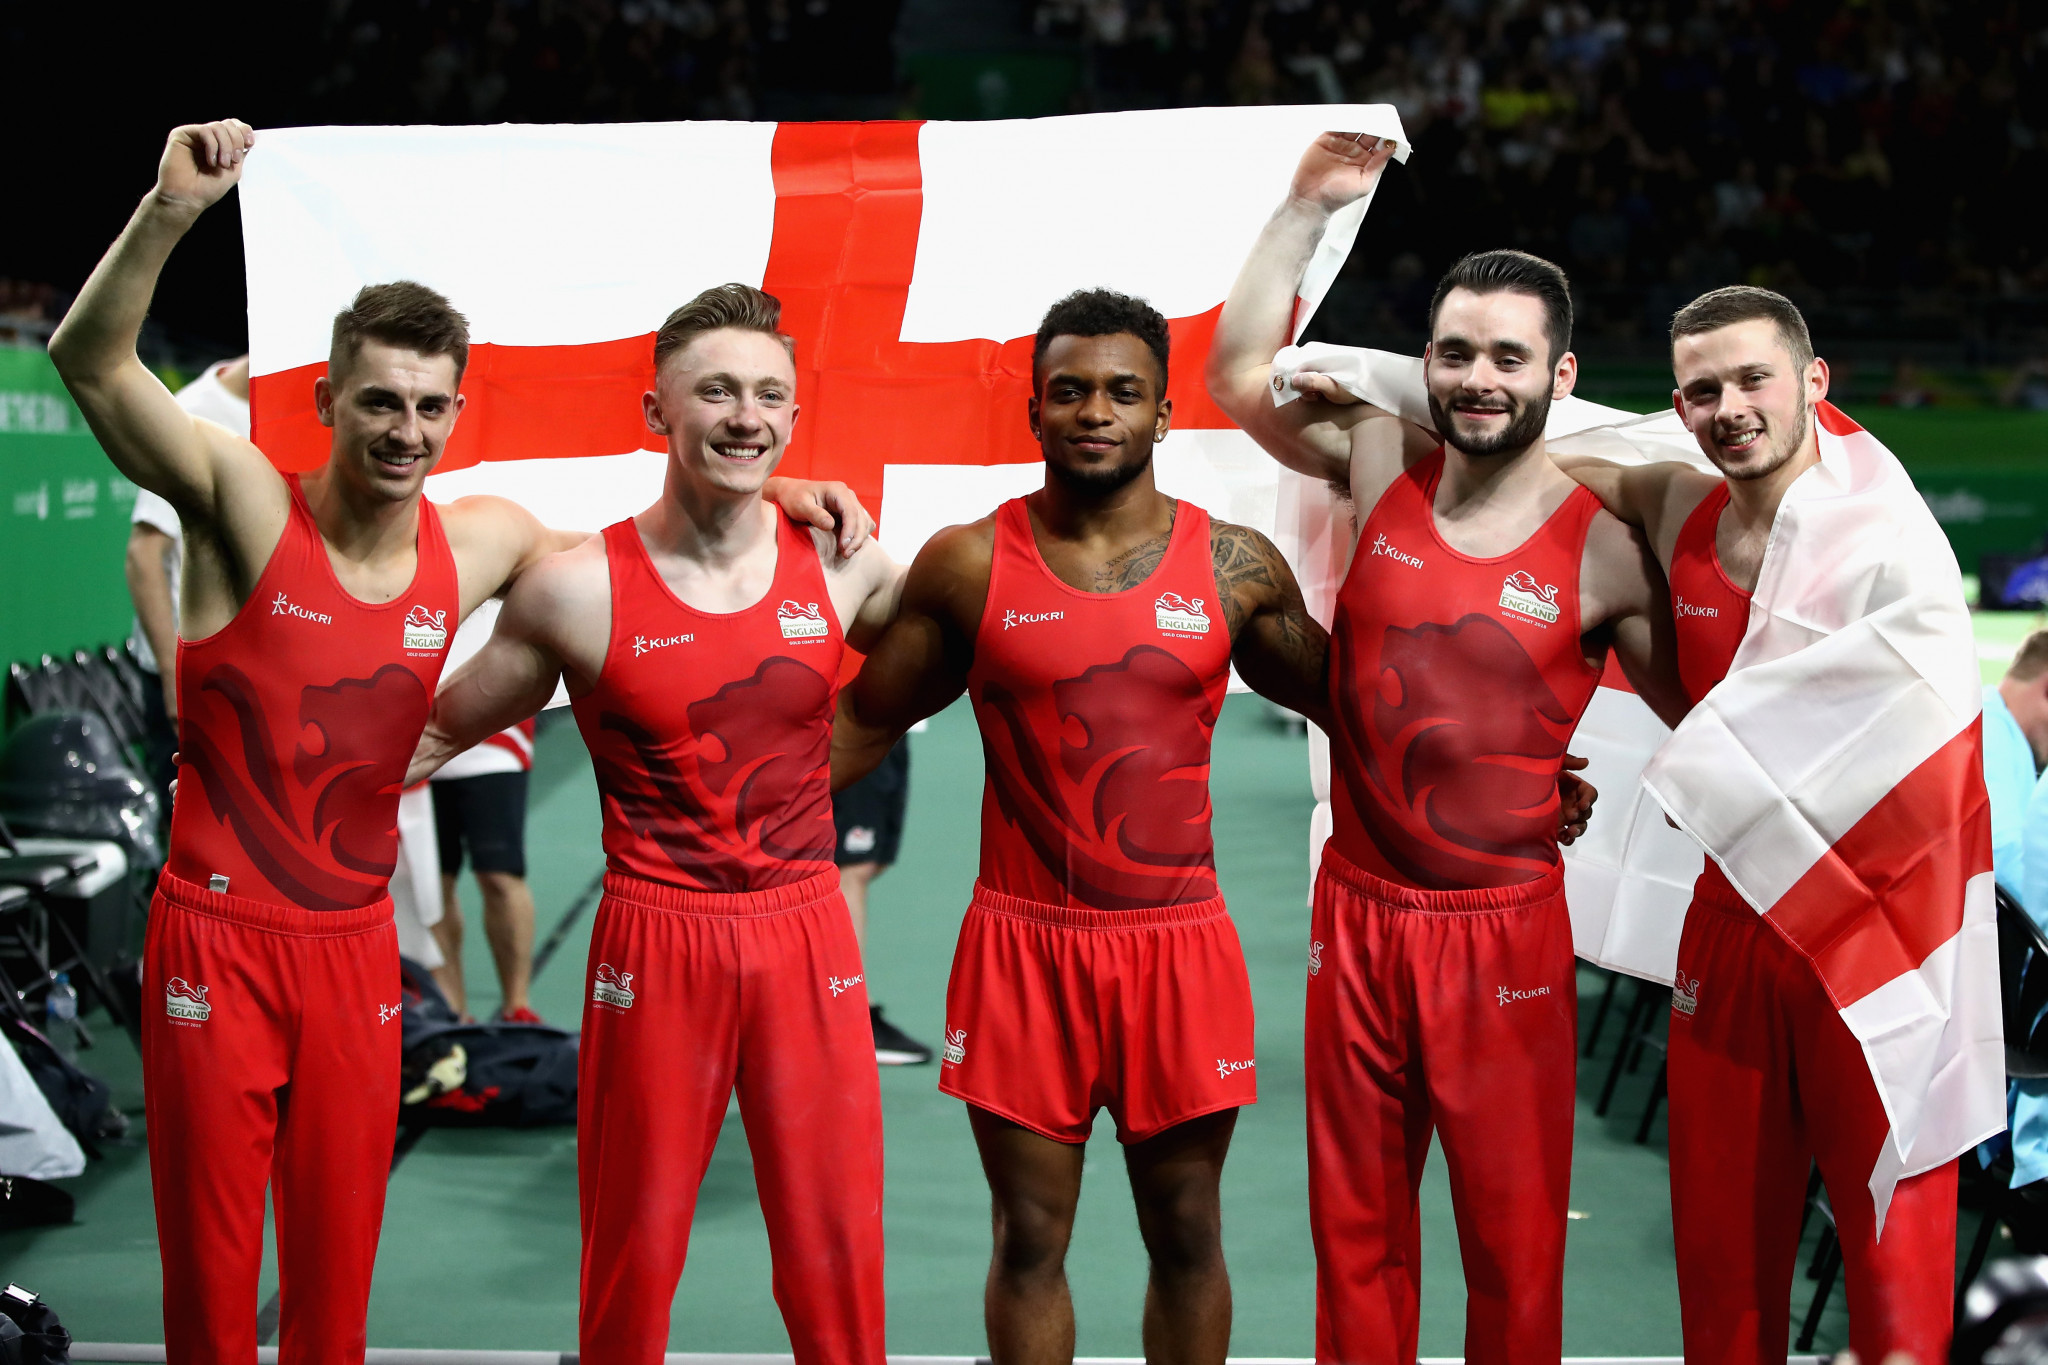 England clinch men's team gold as gymnastics begins at Gold Coast 2018